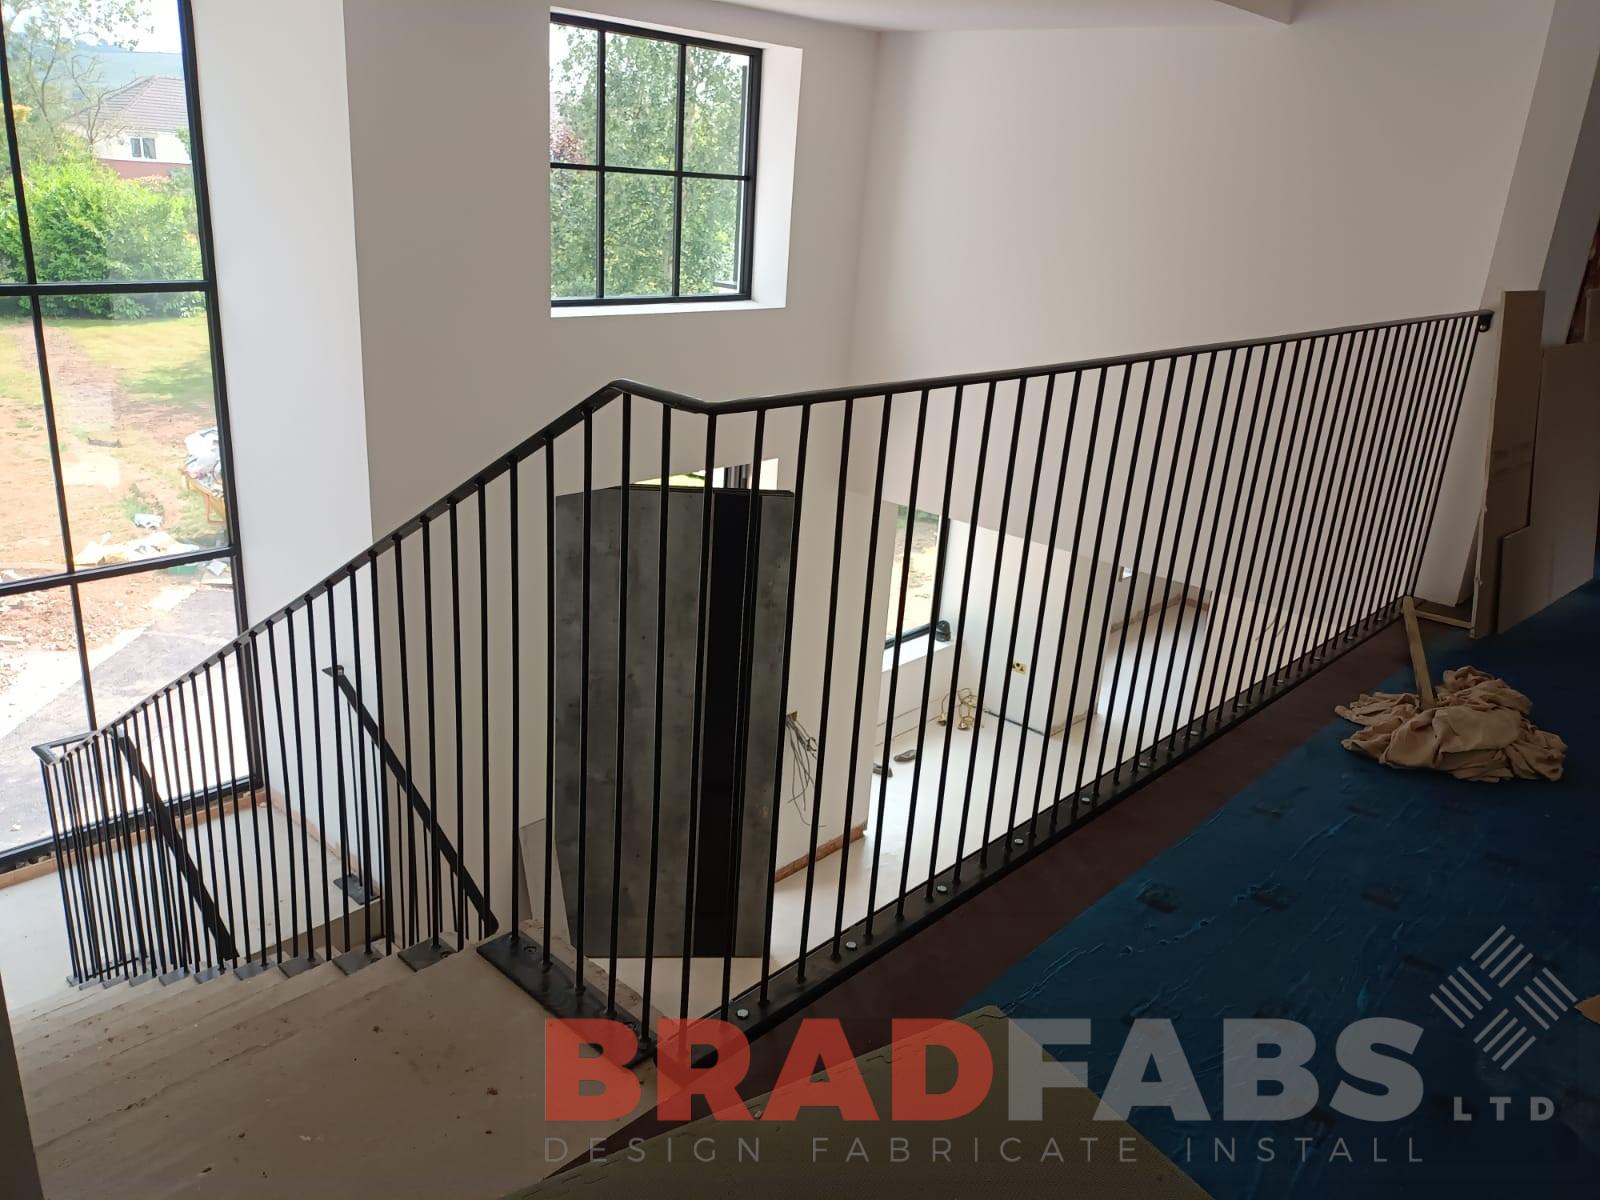 Bradfabs, vertical bar balustrade, steel balustrade